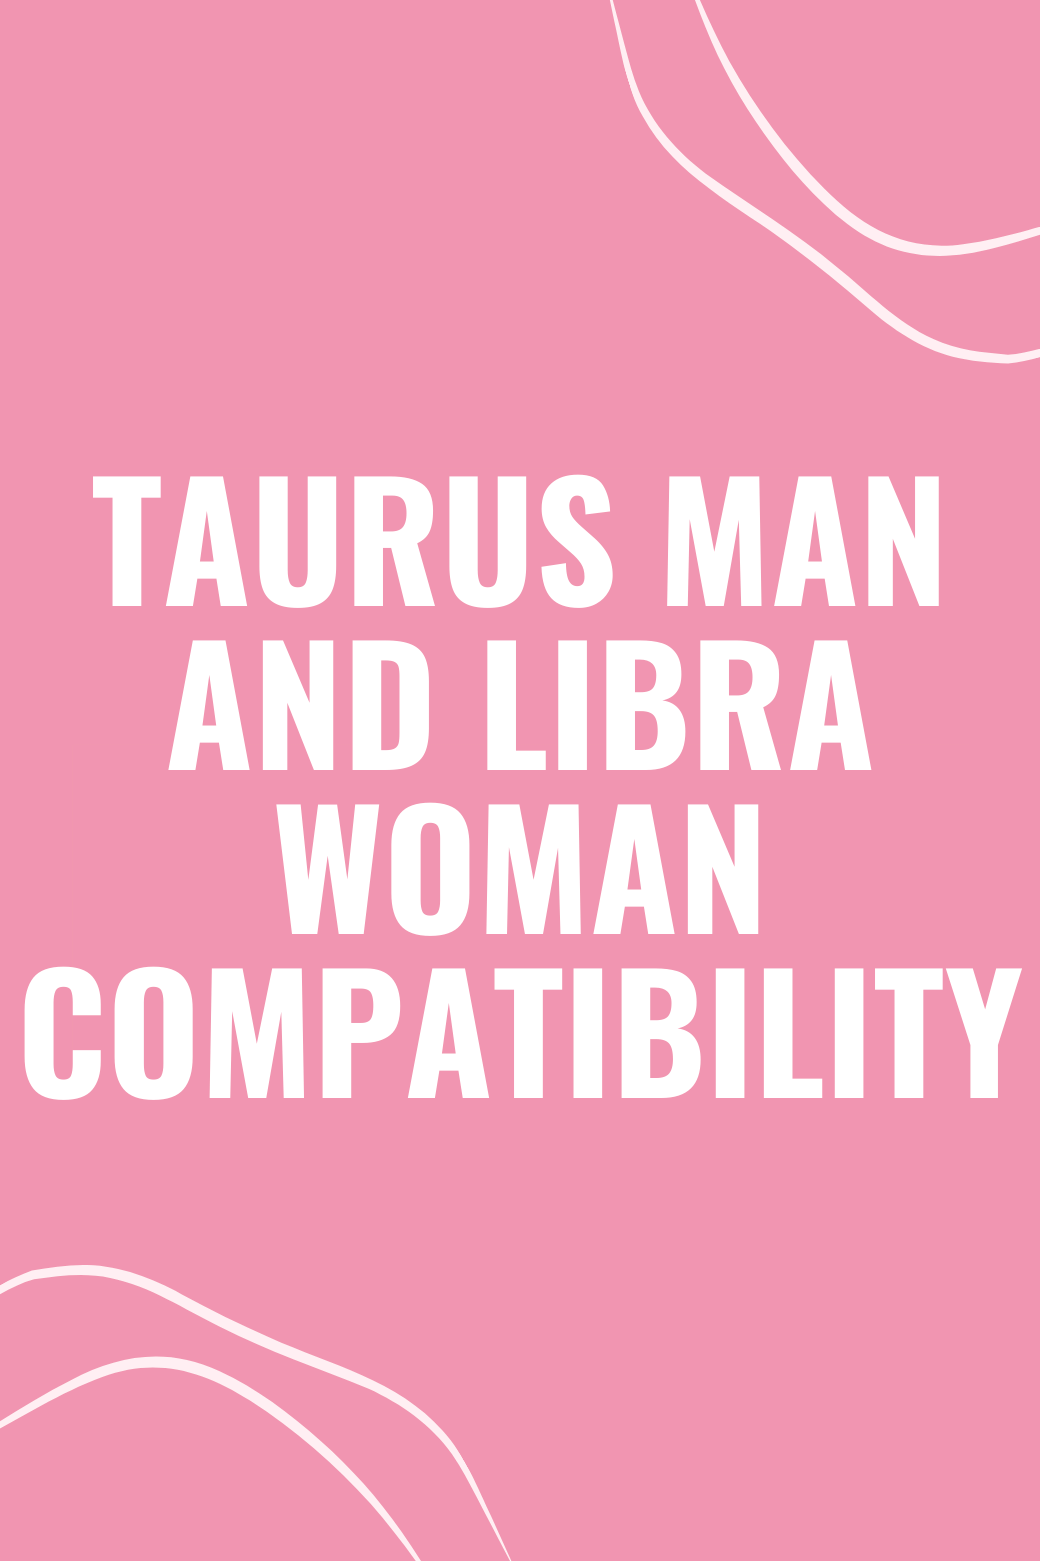 Taurus Man and Libra Woman Compatibility